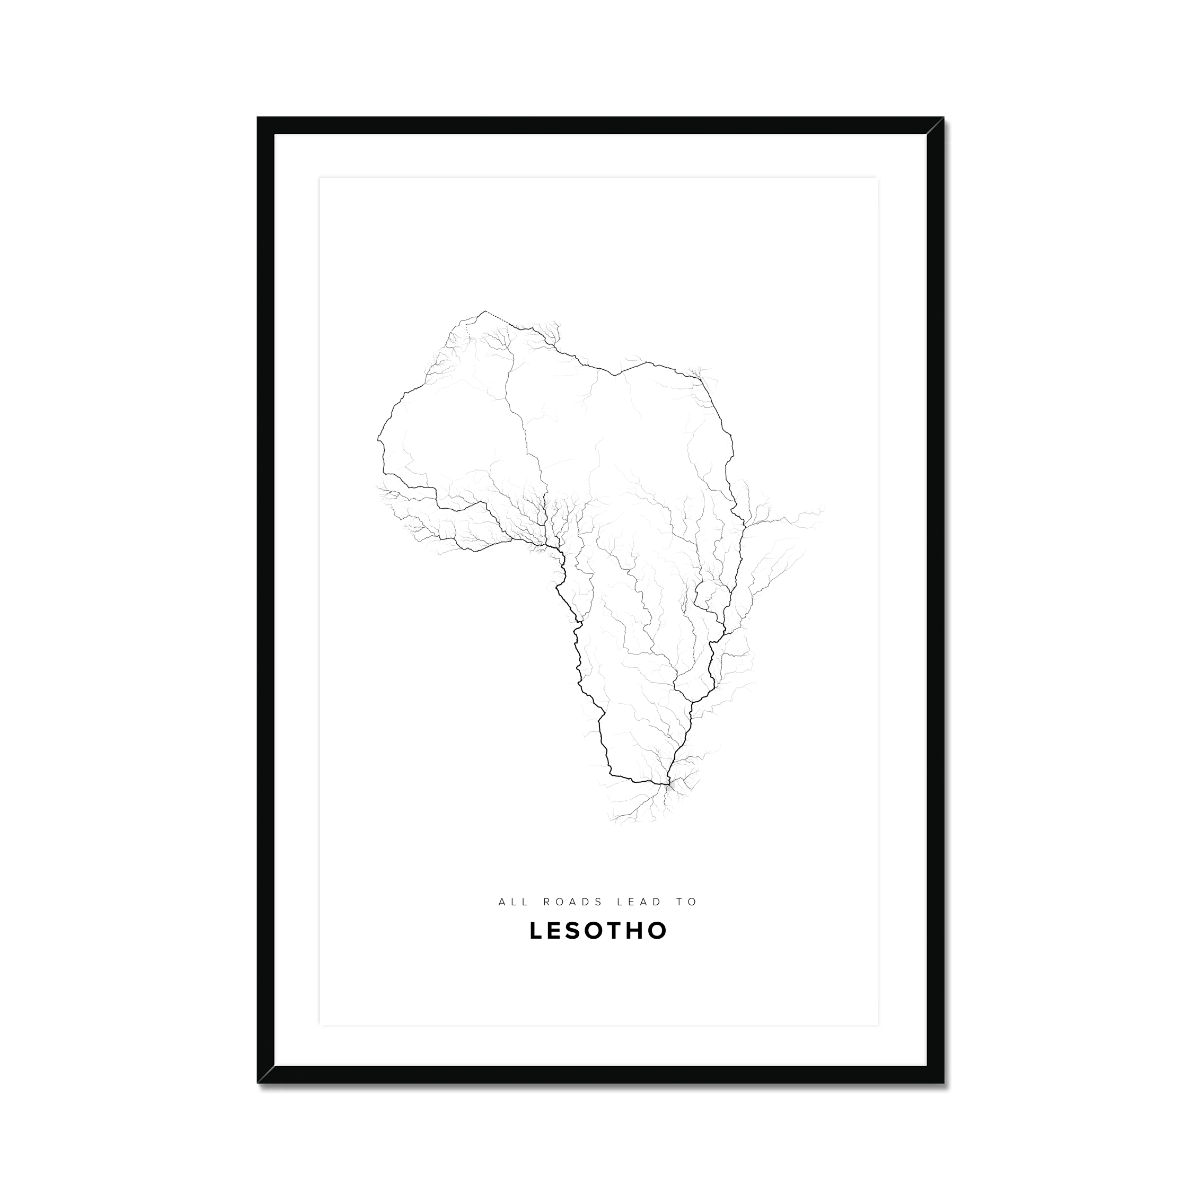 All roads lead to Lesotho Fine Art Map Print